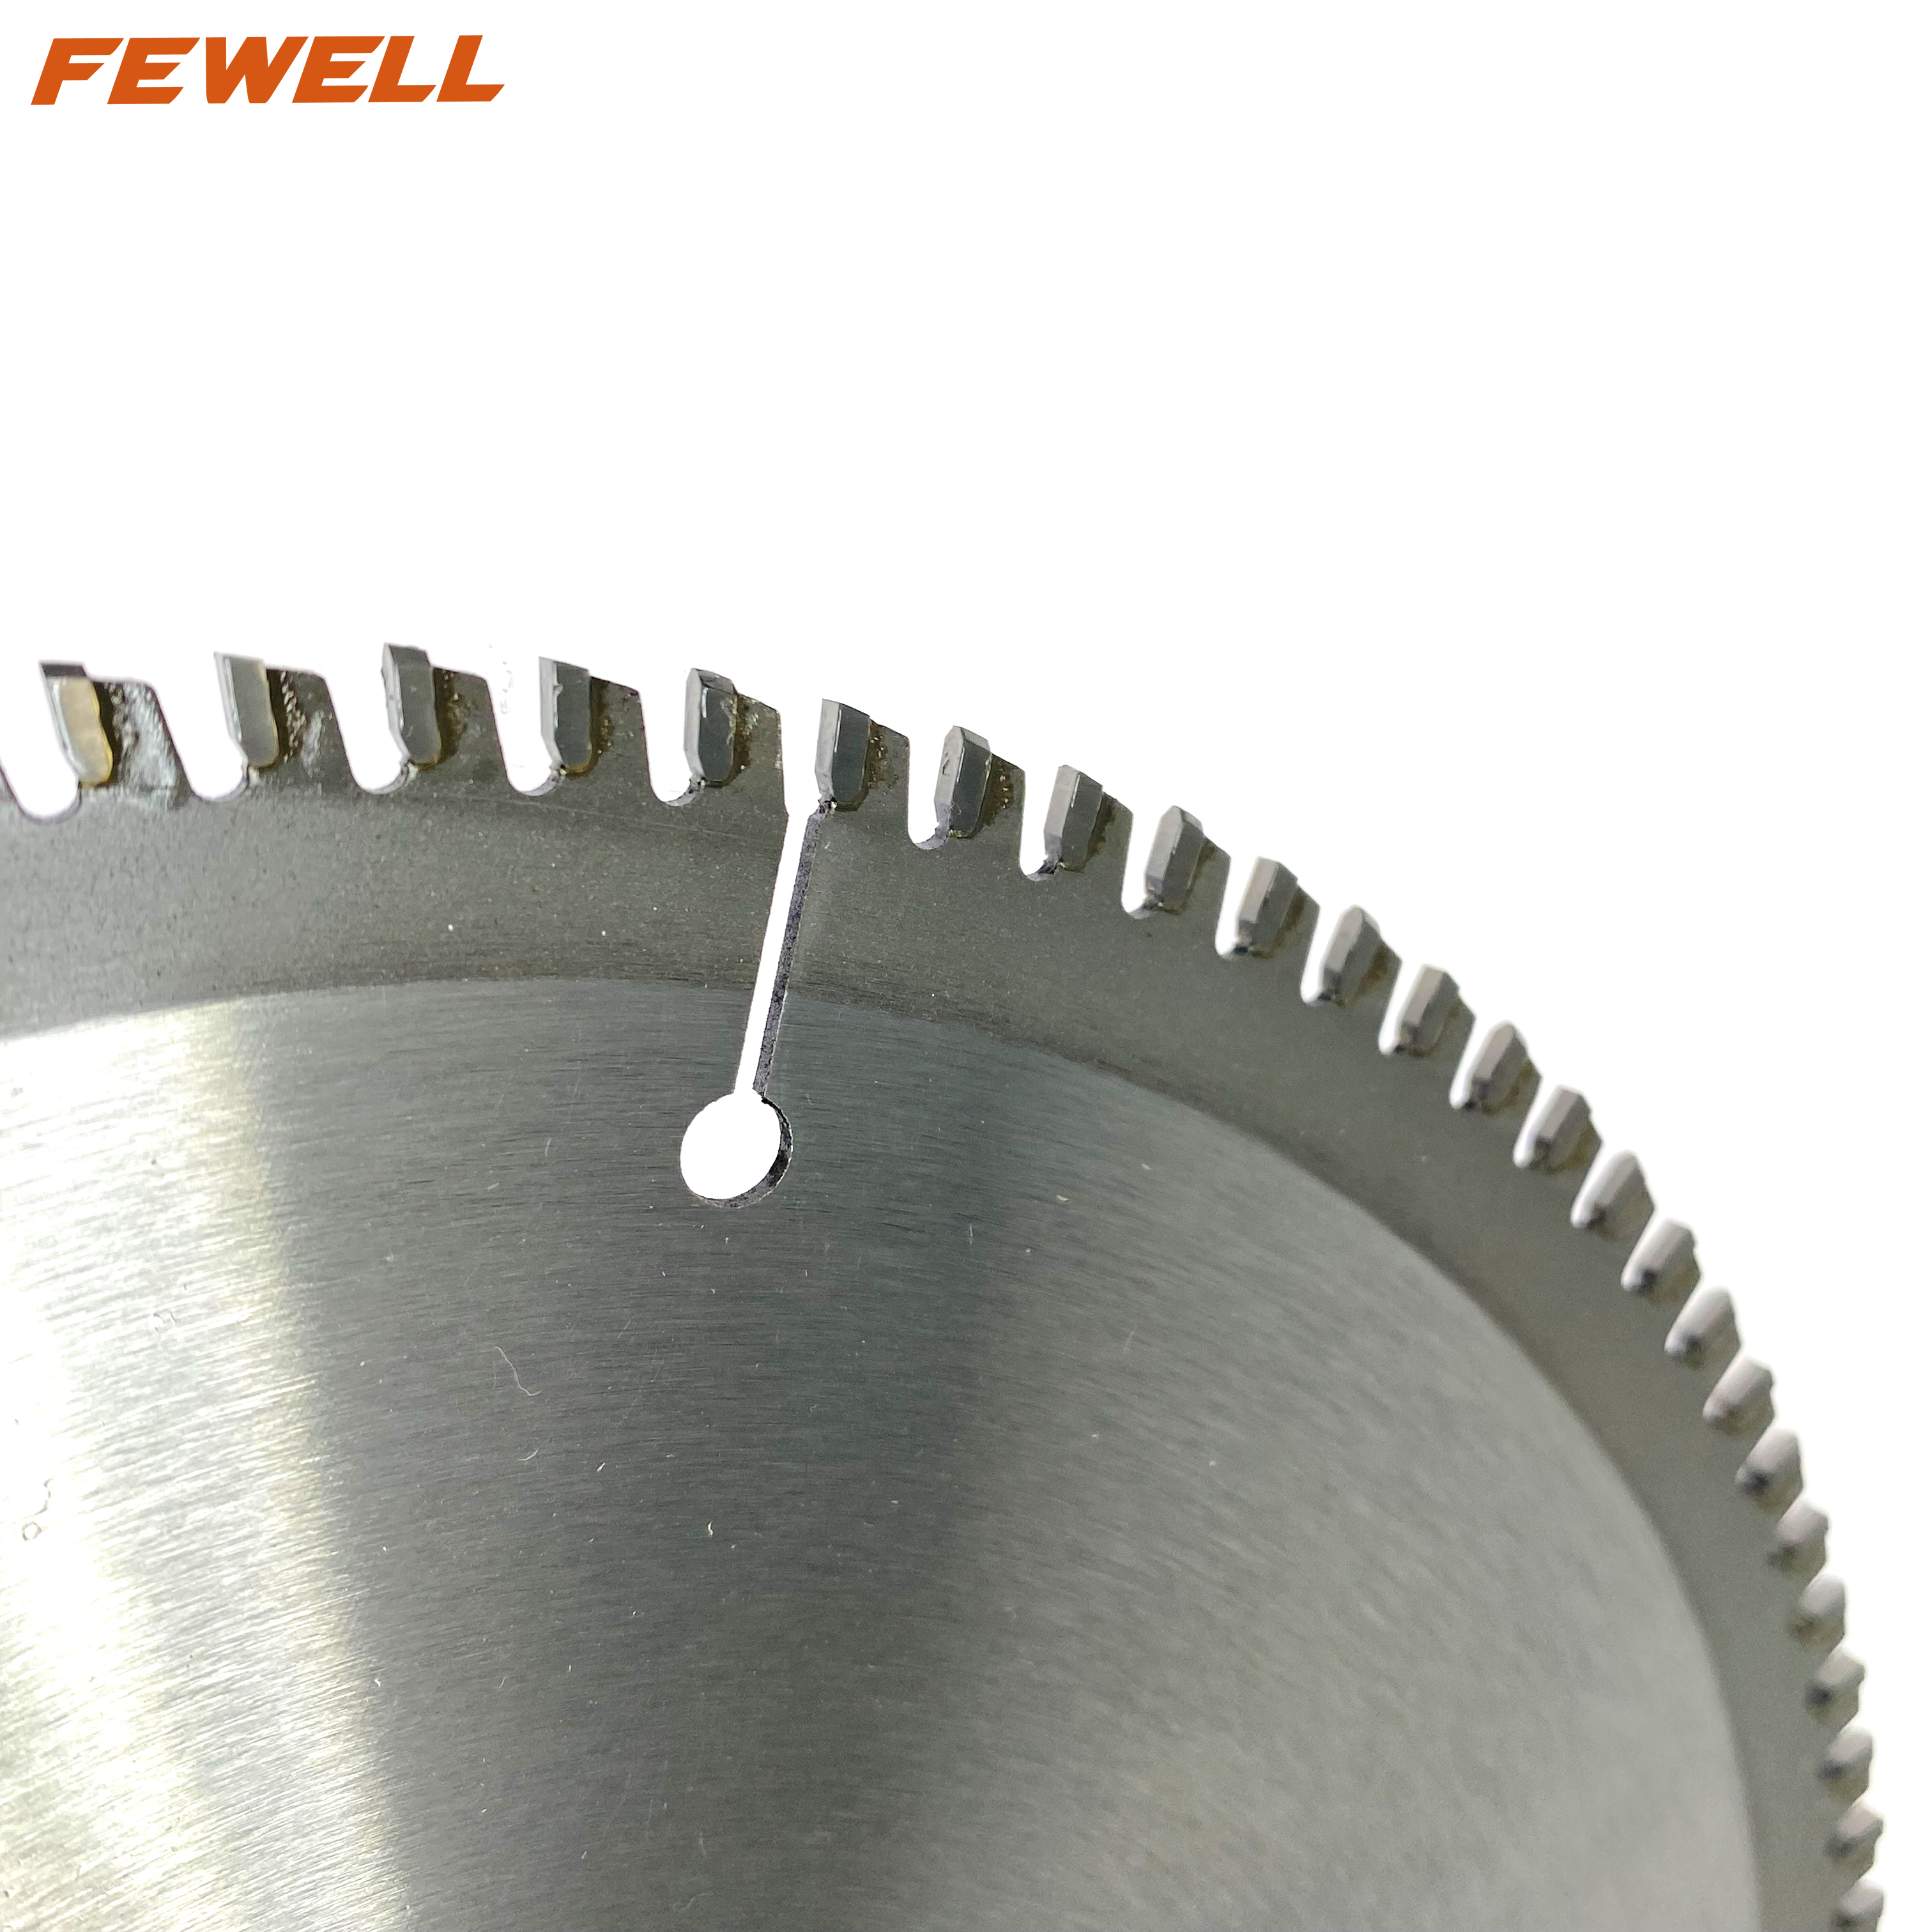 Hoja de sierra circular tct Koera de 8 pulgadas 205*100T*25,4mm para cortar aluminio